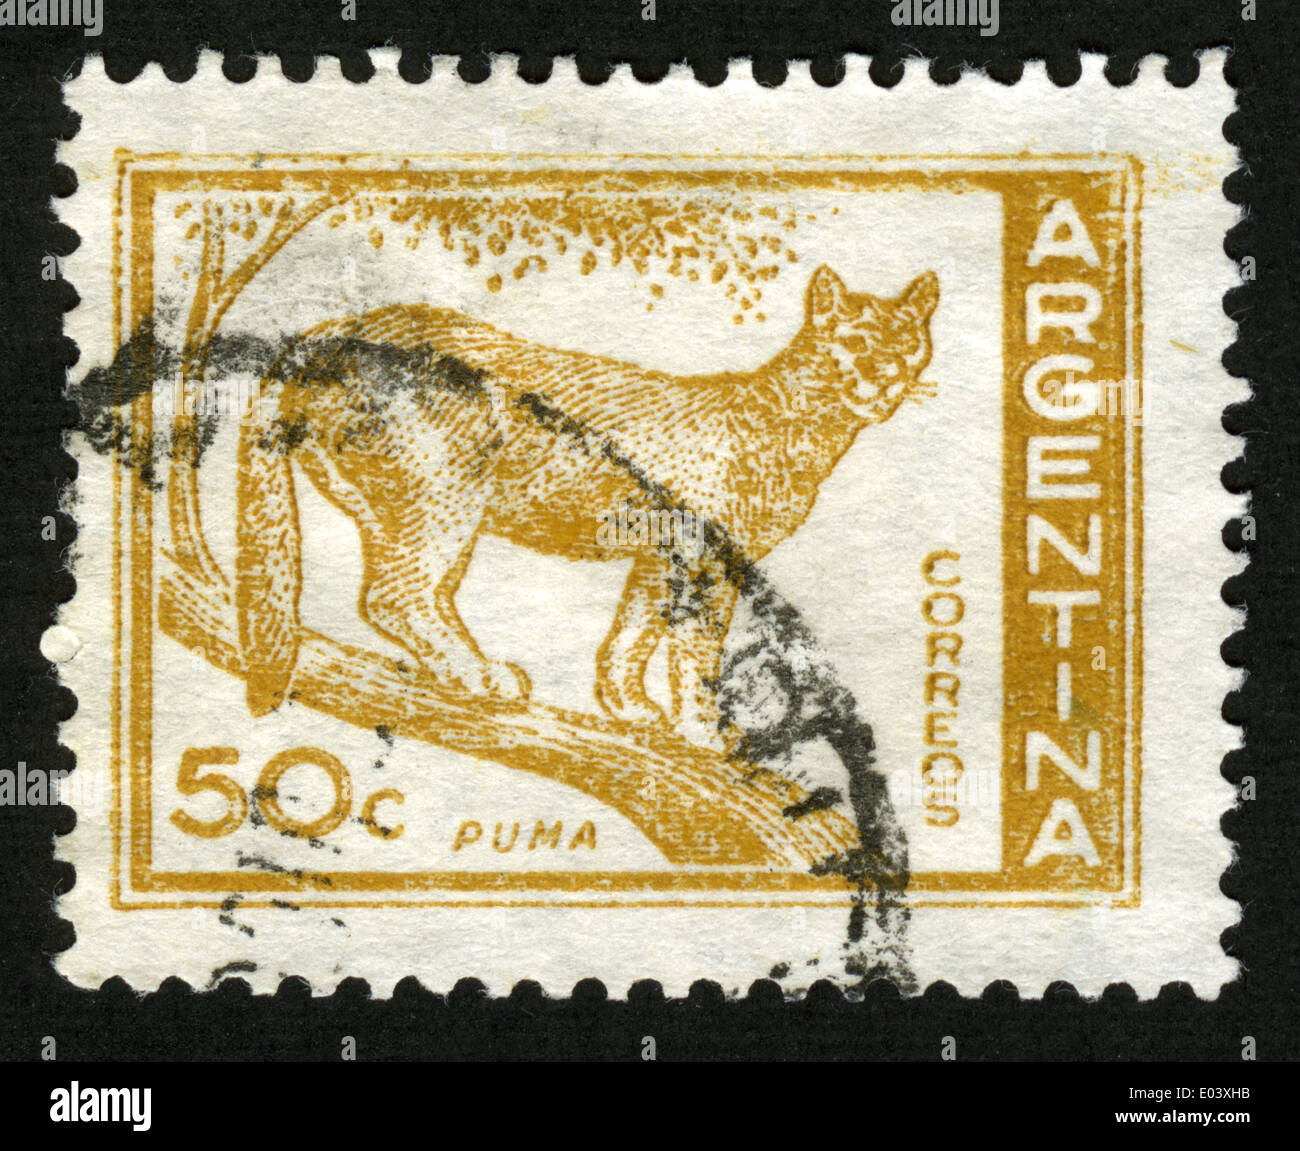 Argentina, post mark, stamp, puma,animals Stock Photo - Alamy